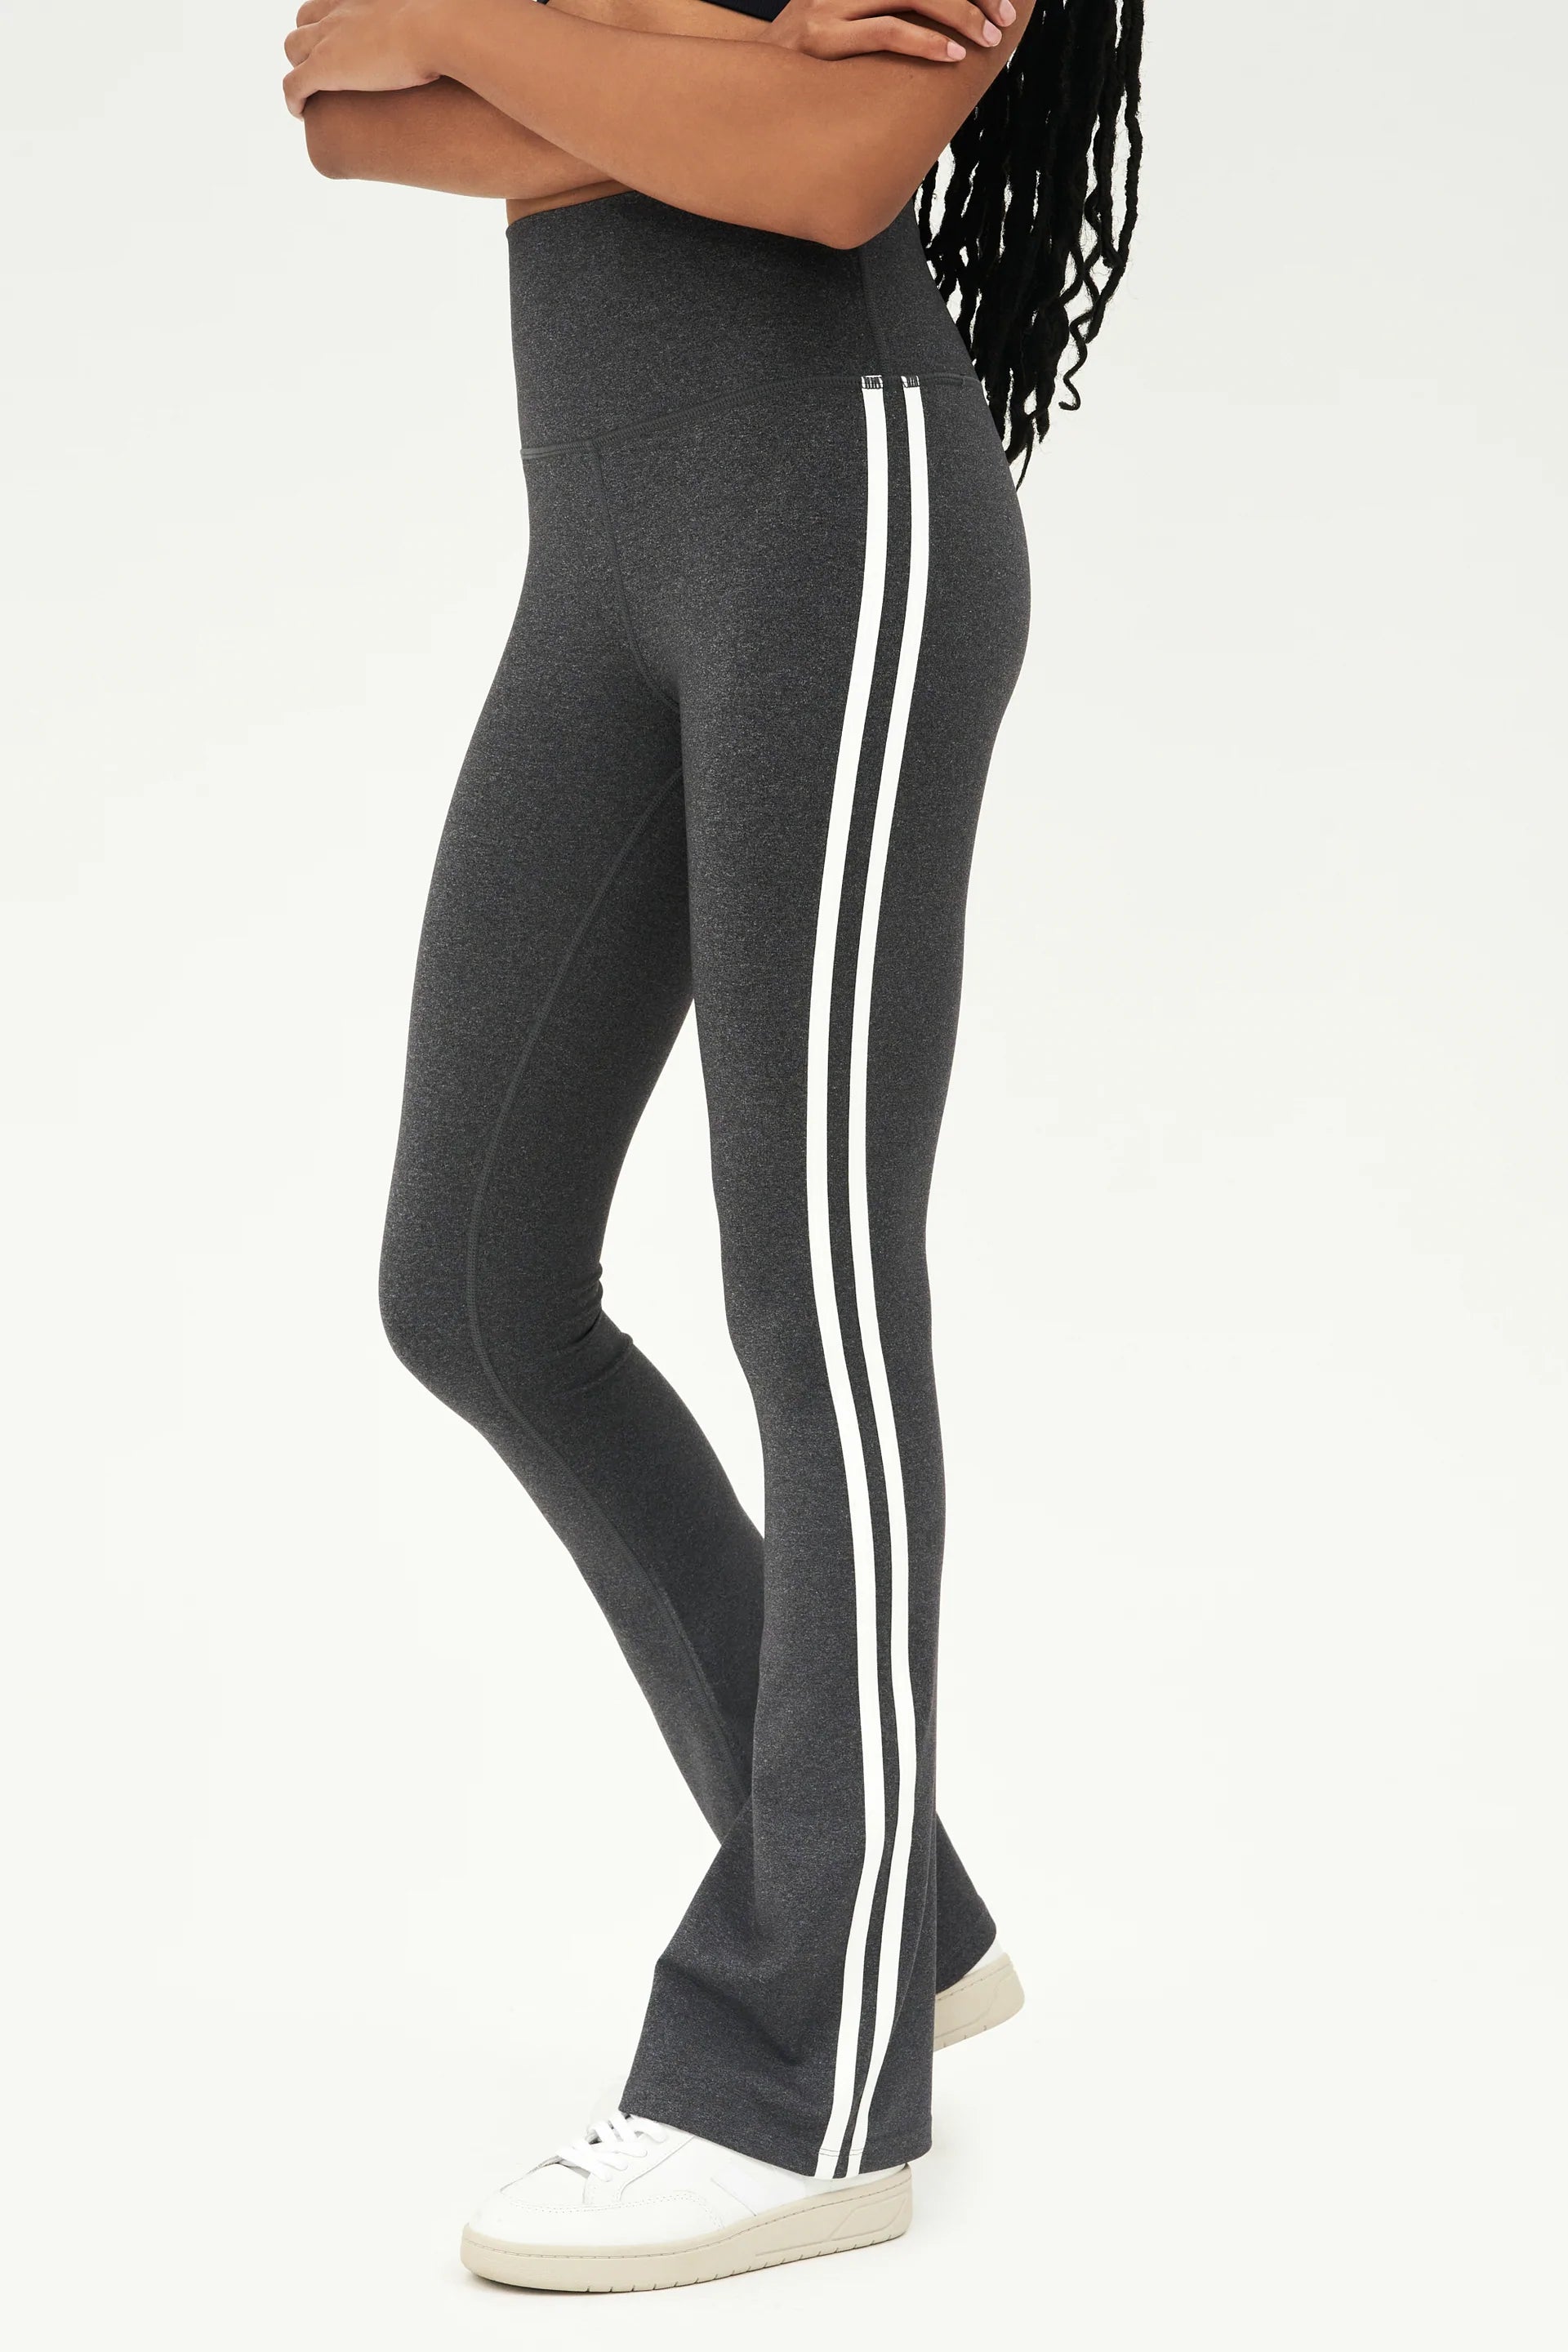 SPLITS59 Striped stretch leggings